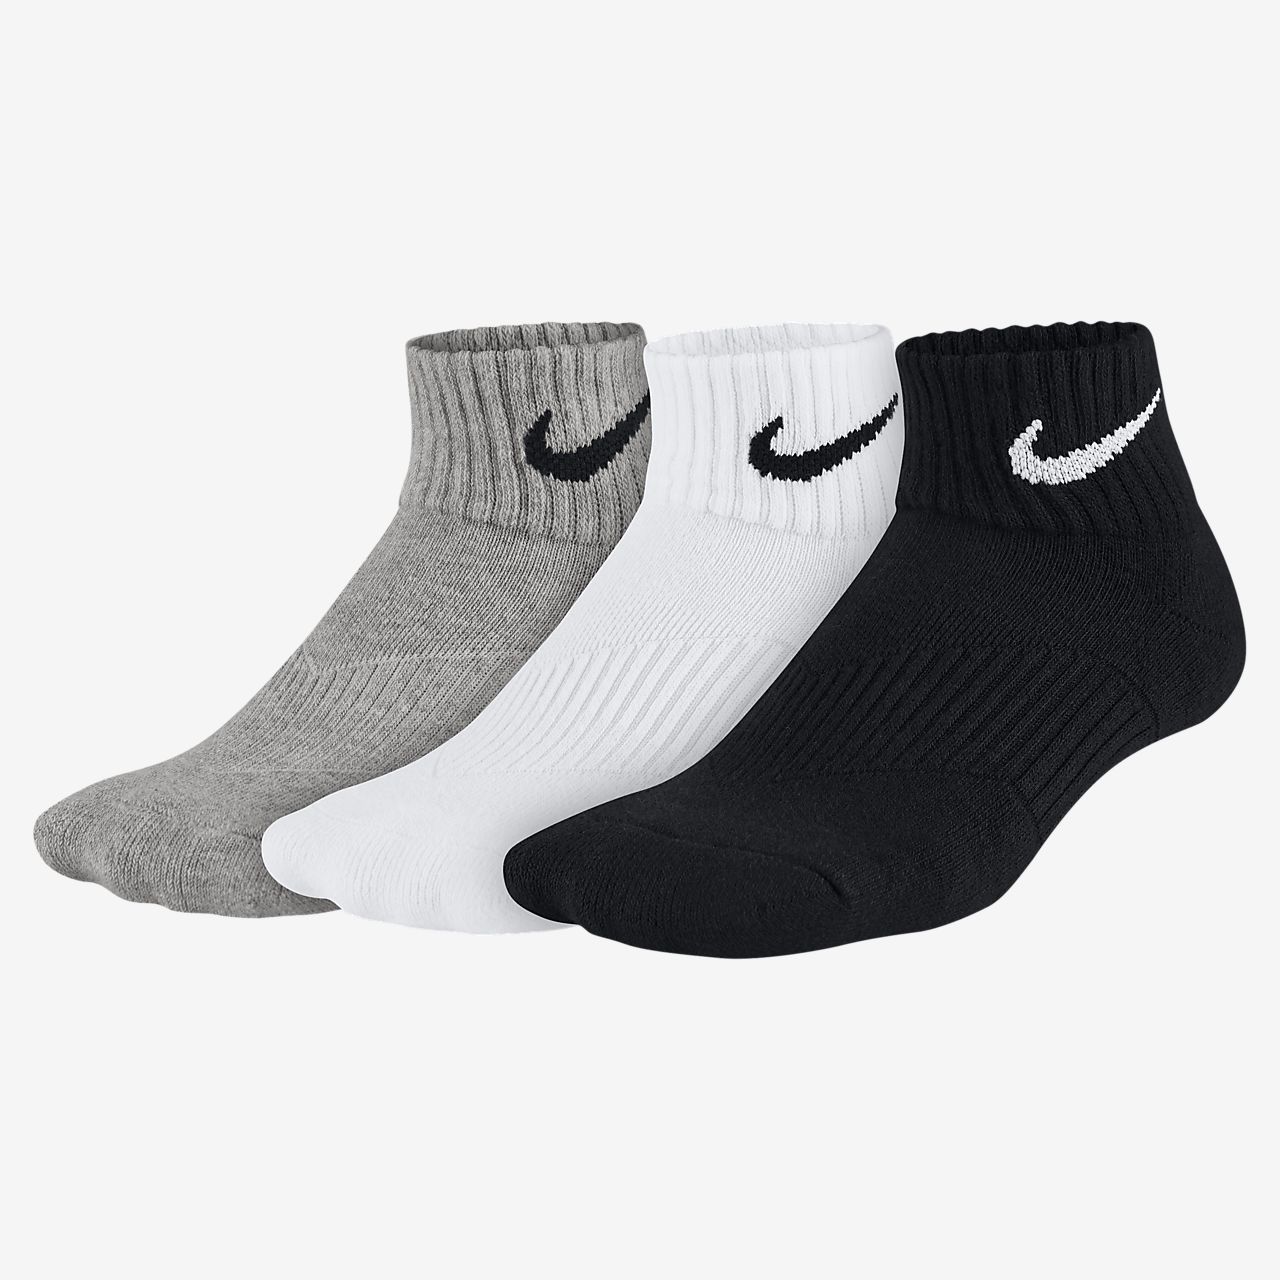 size 14 nike socks